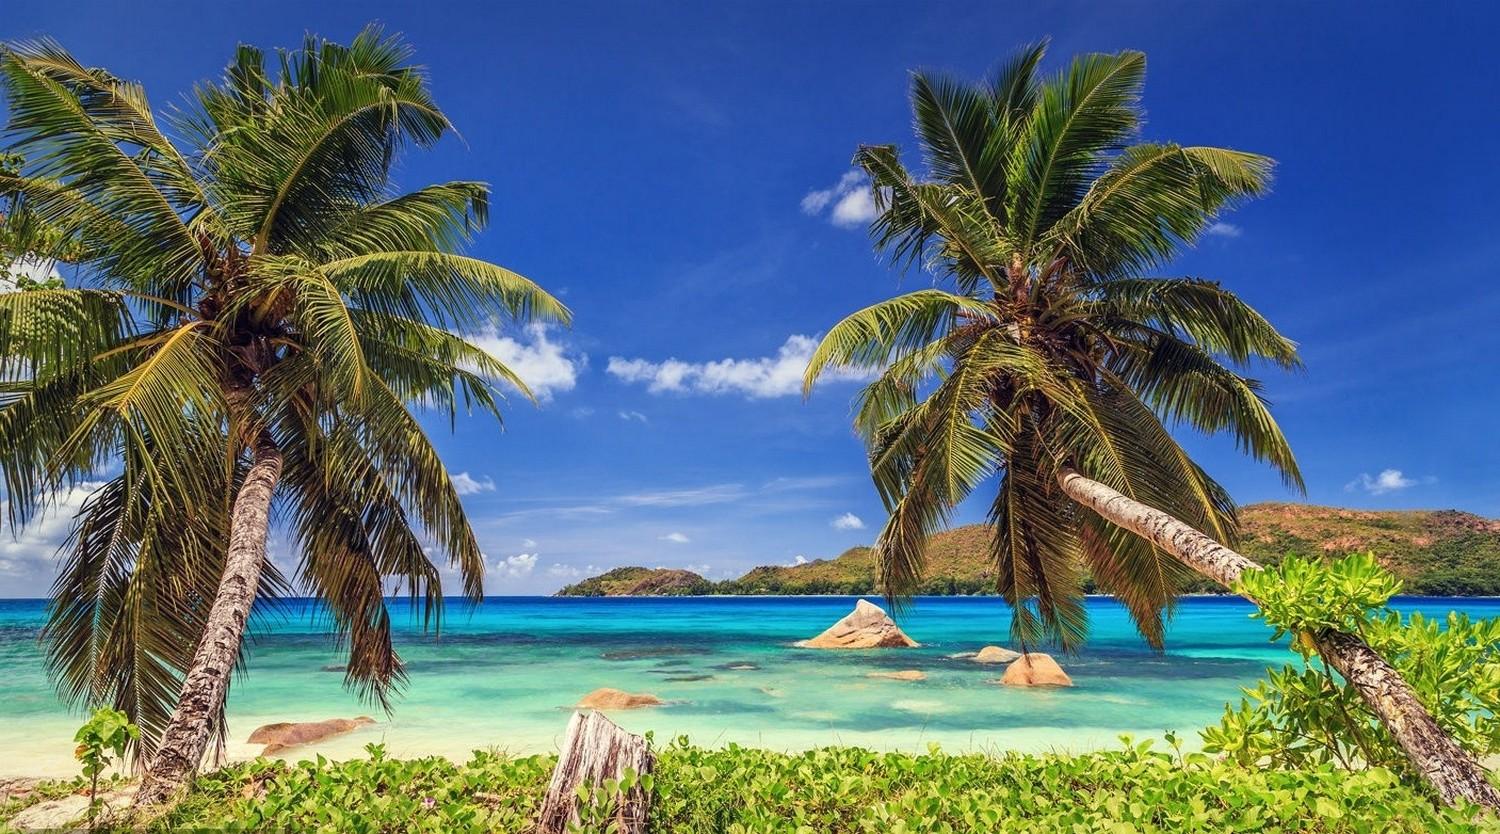 Nature Landscape Tropical Beach Island Palm Trees Sea